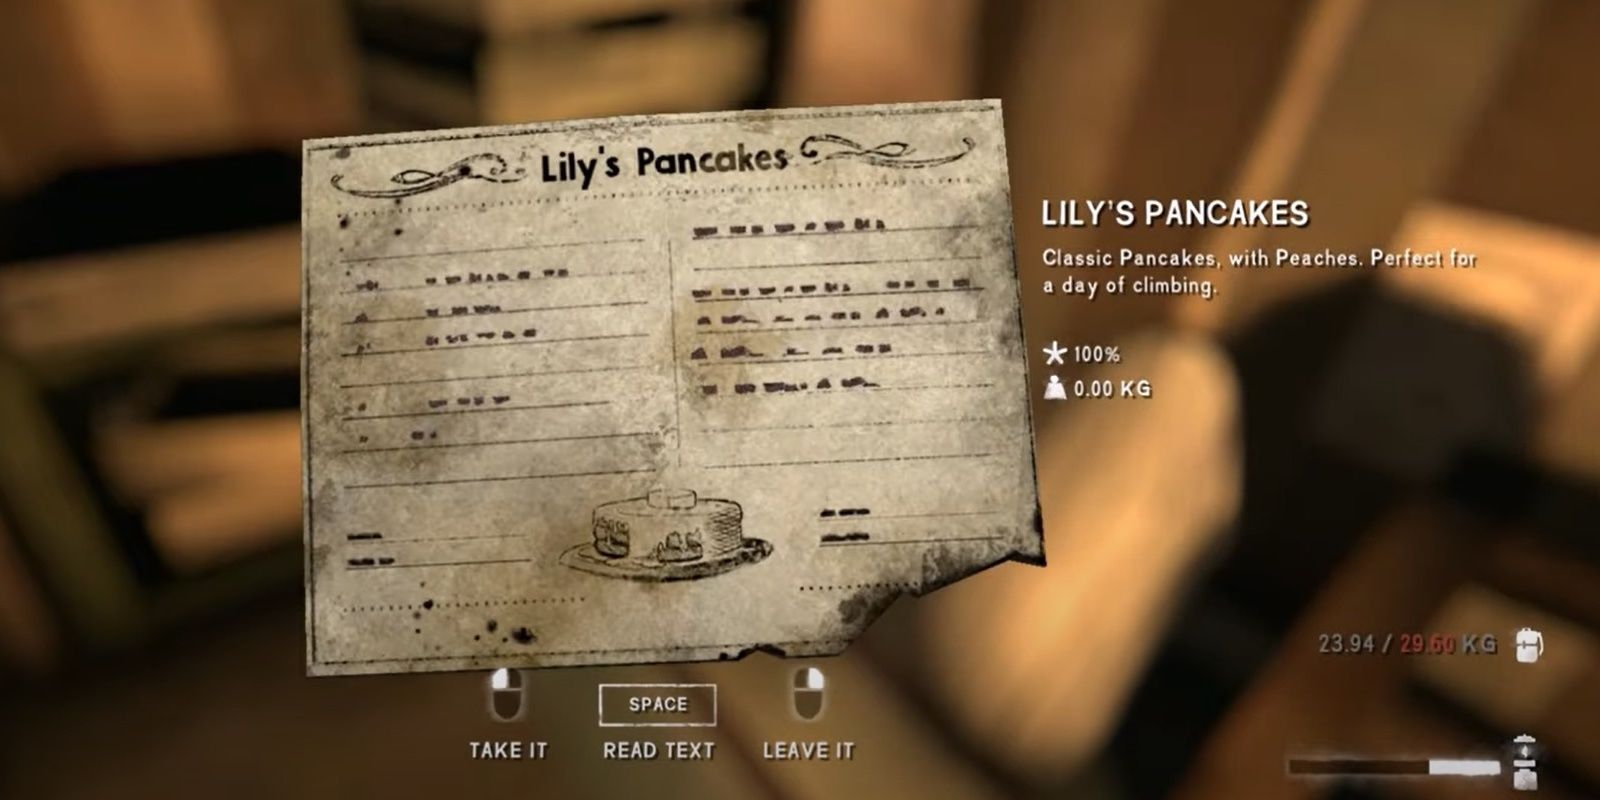 Long Dark Lily's Pancakes recipe card